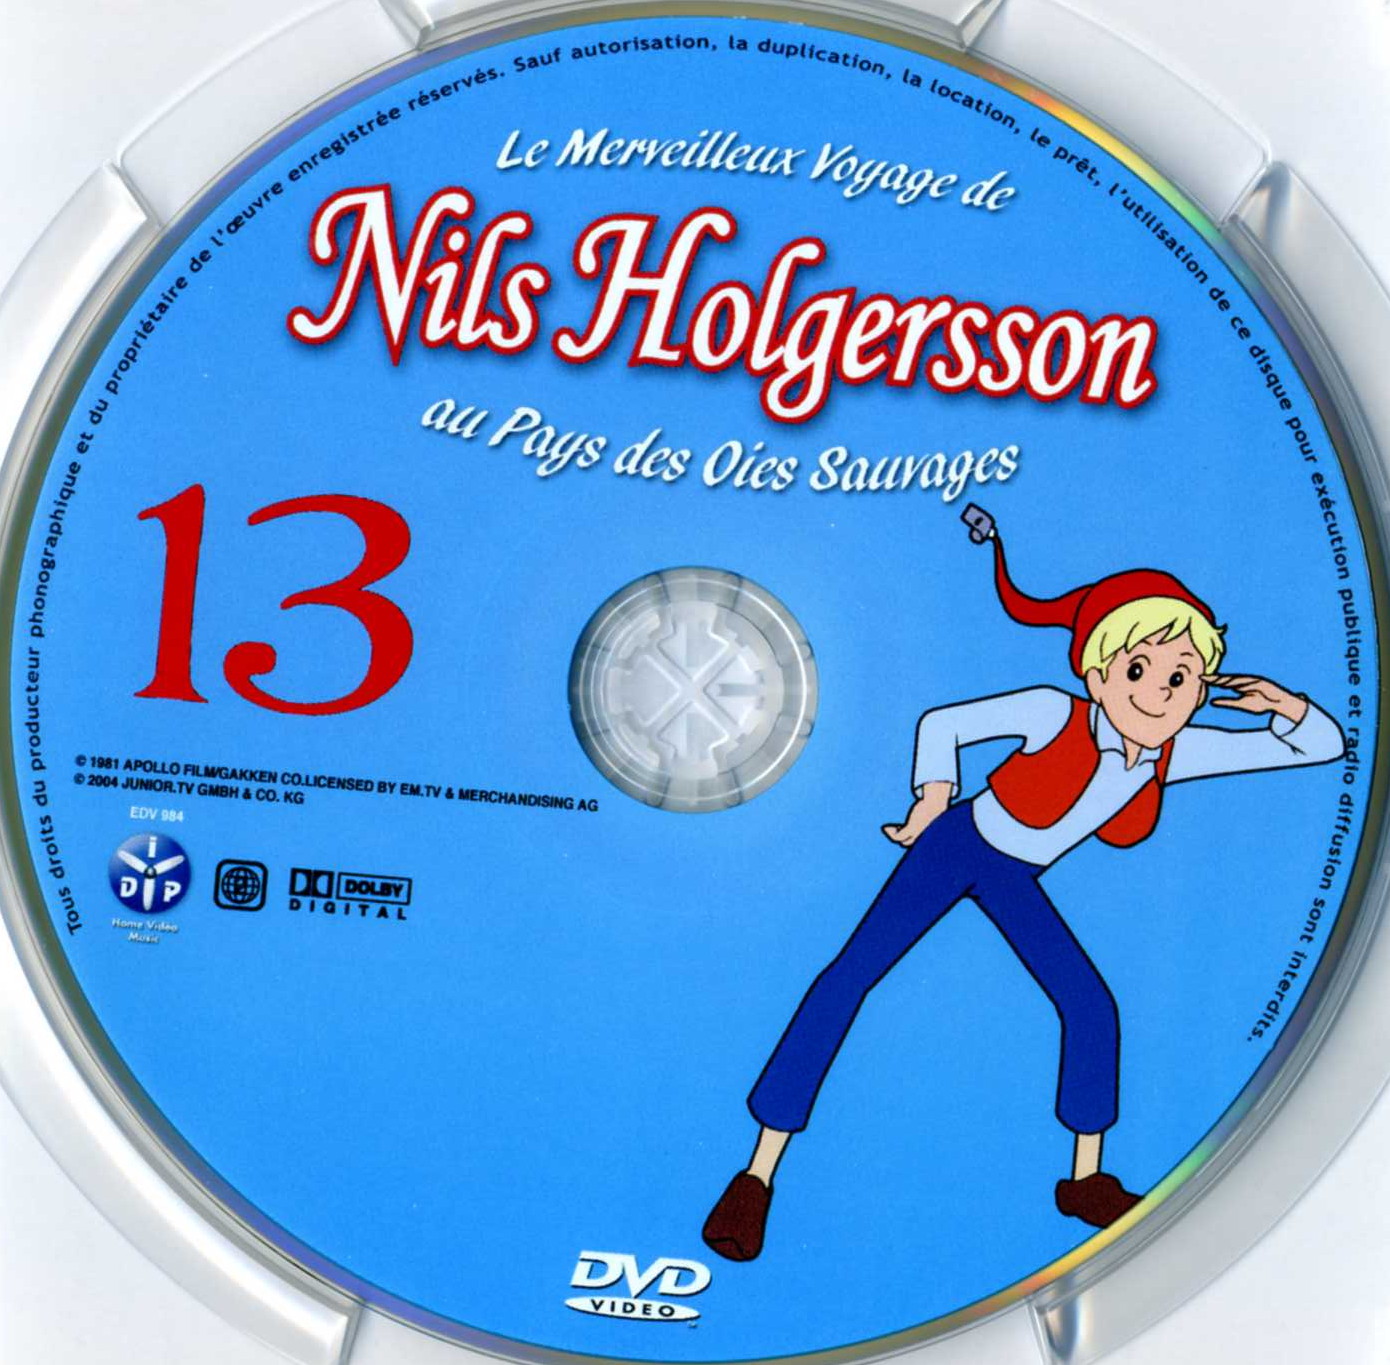 Nils Holgersson vol 13